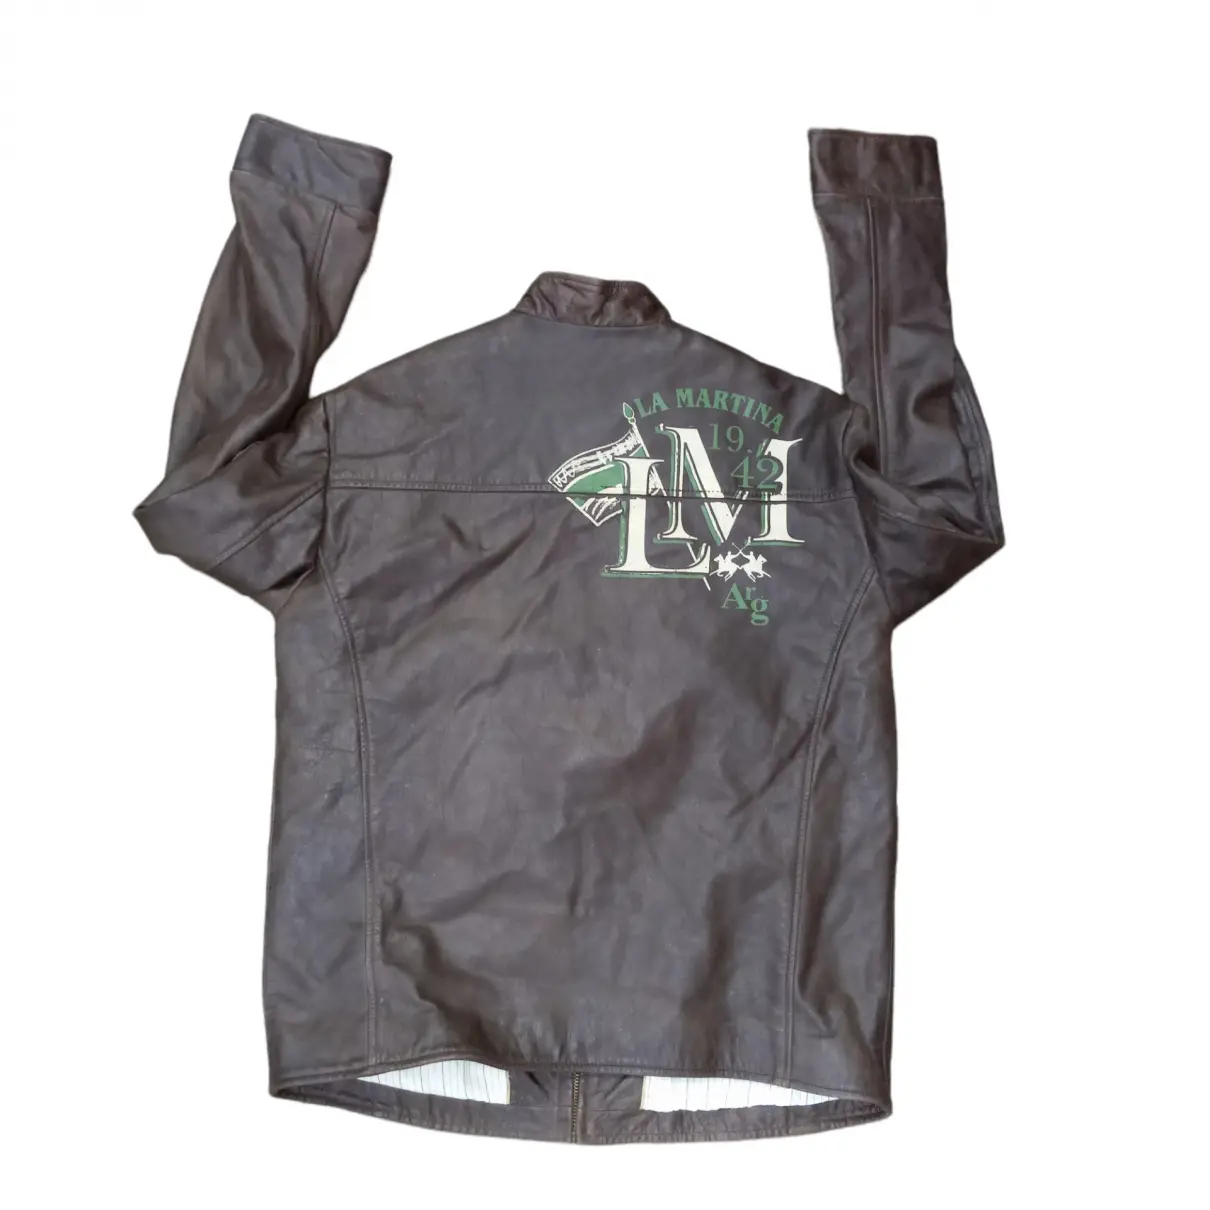 Buy LA MARTINA Leather jacket online